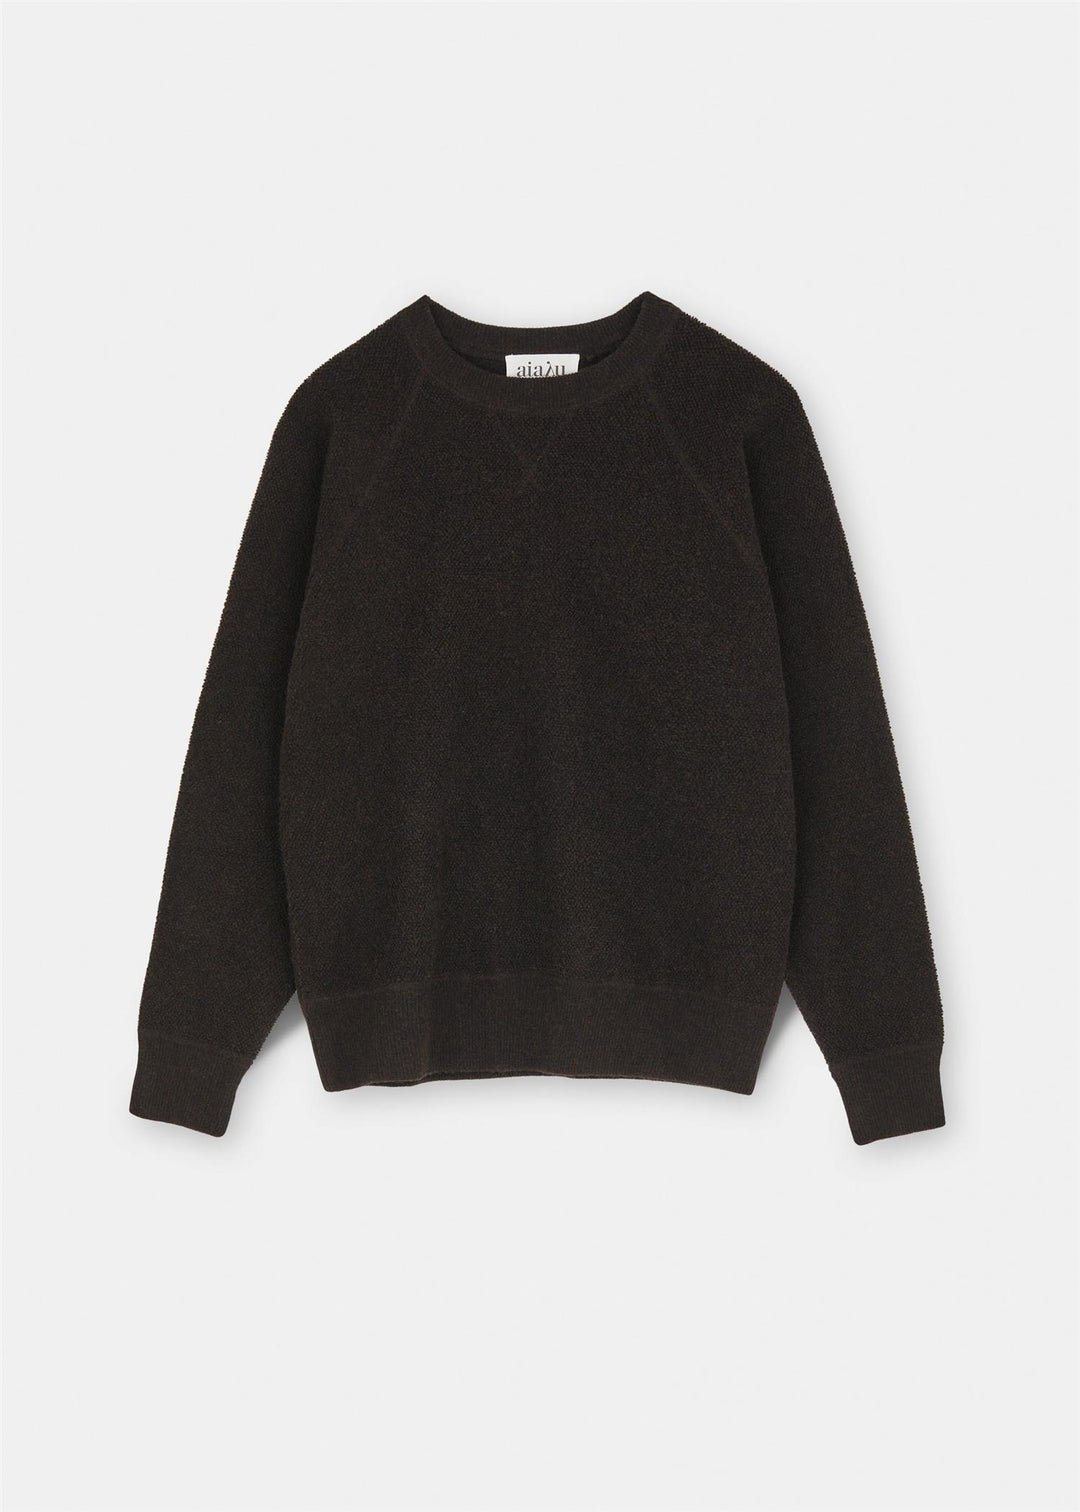 April Knitted Sweatshirt Dark Brown